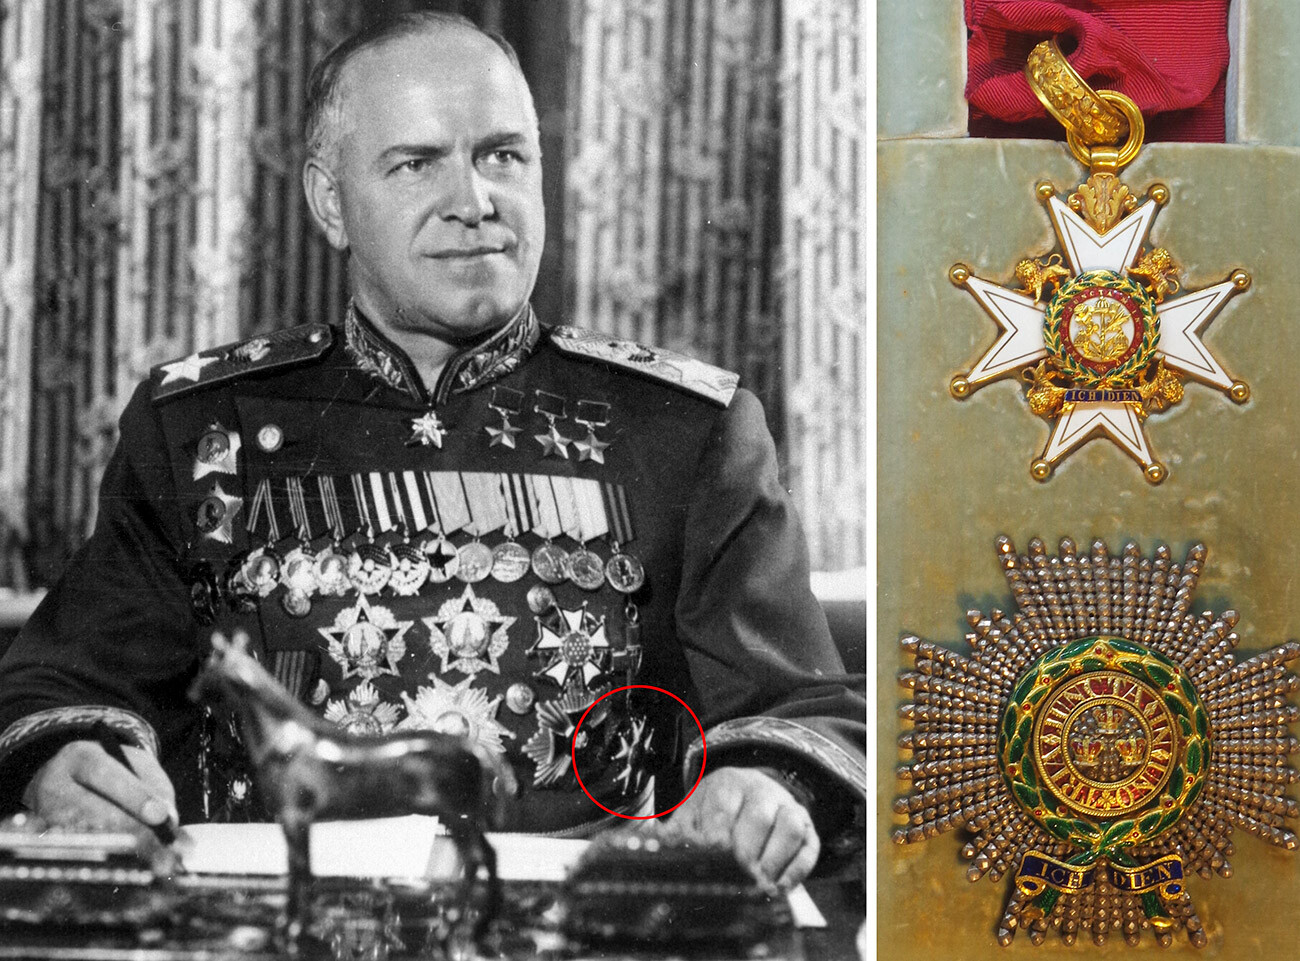 Слева: Маршал Советского Союза Георгий Жуков. Справа: Орден Бани.